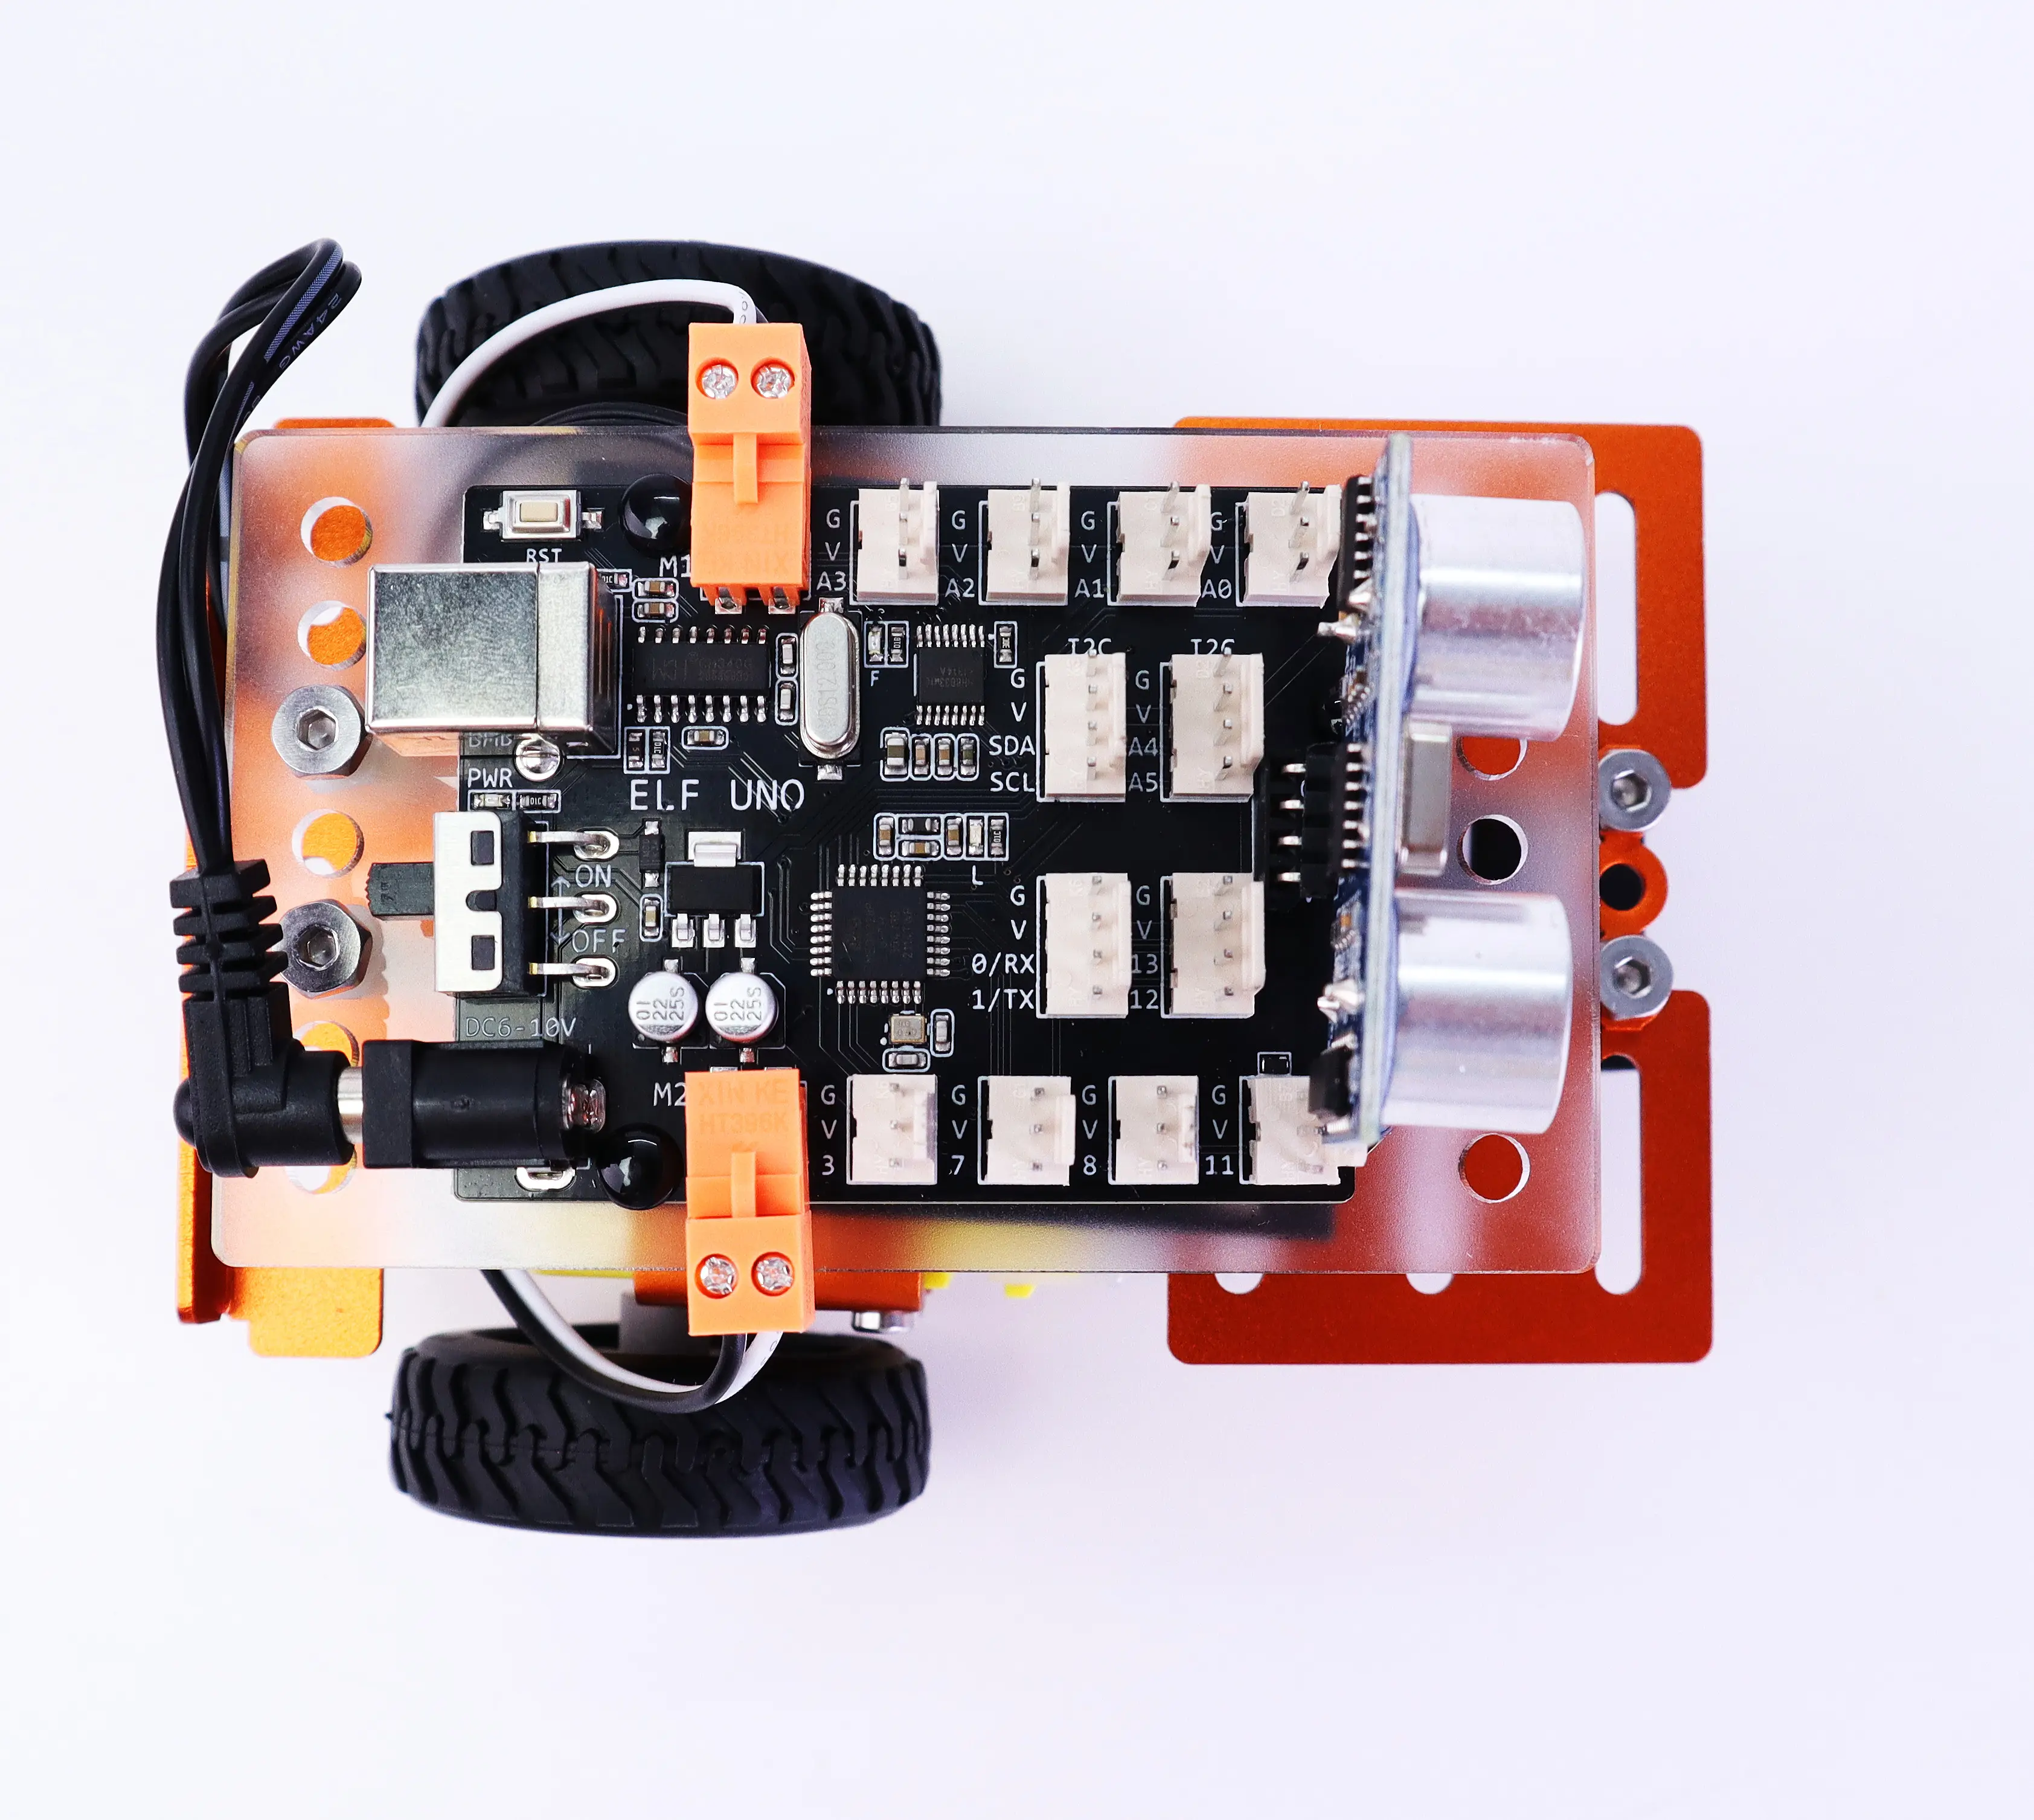 Programming Ar-duino starter kit U-no Mainboard Atmega328p Chip Educational diy Robot Kit car ar-duino educational equipment